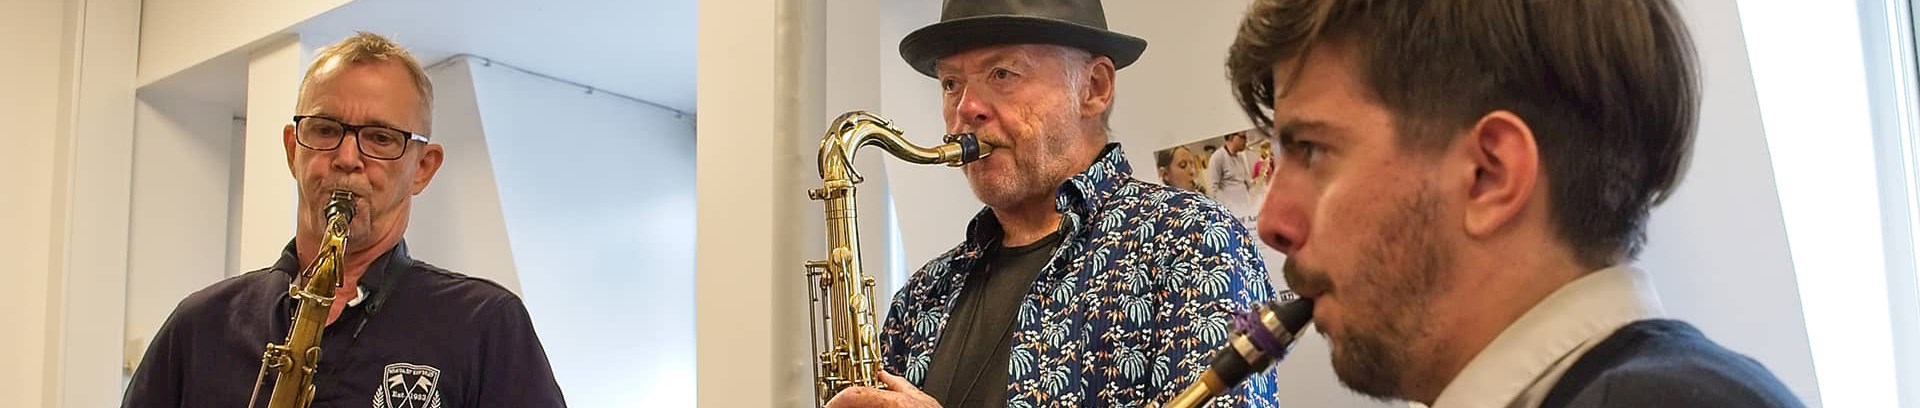 Jazz Me Up - saxofonkursus i FOF Aarhus.